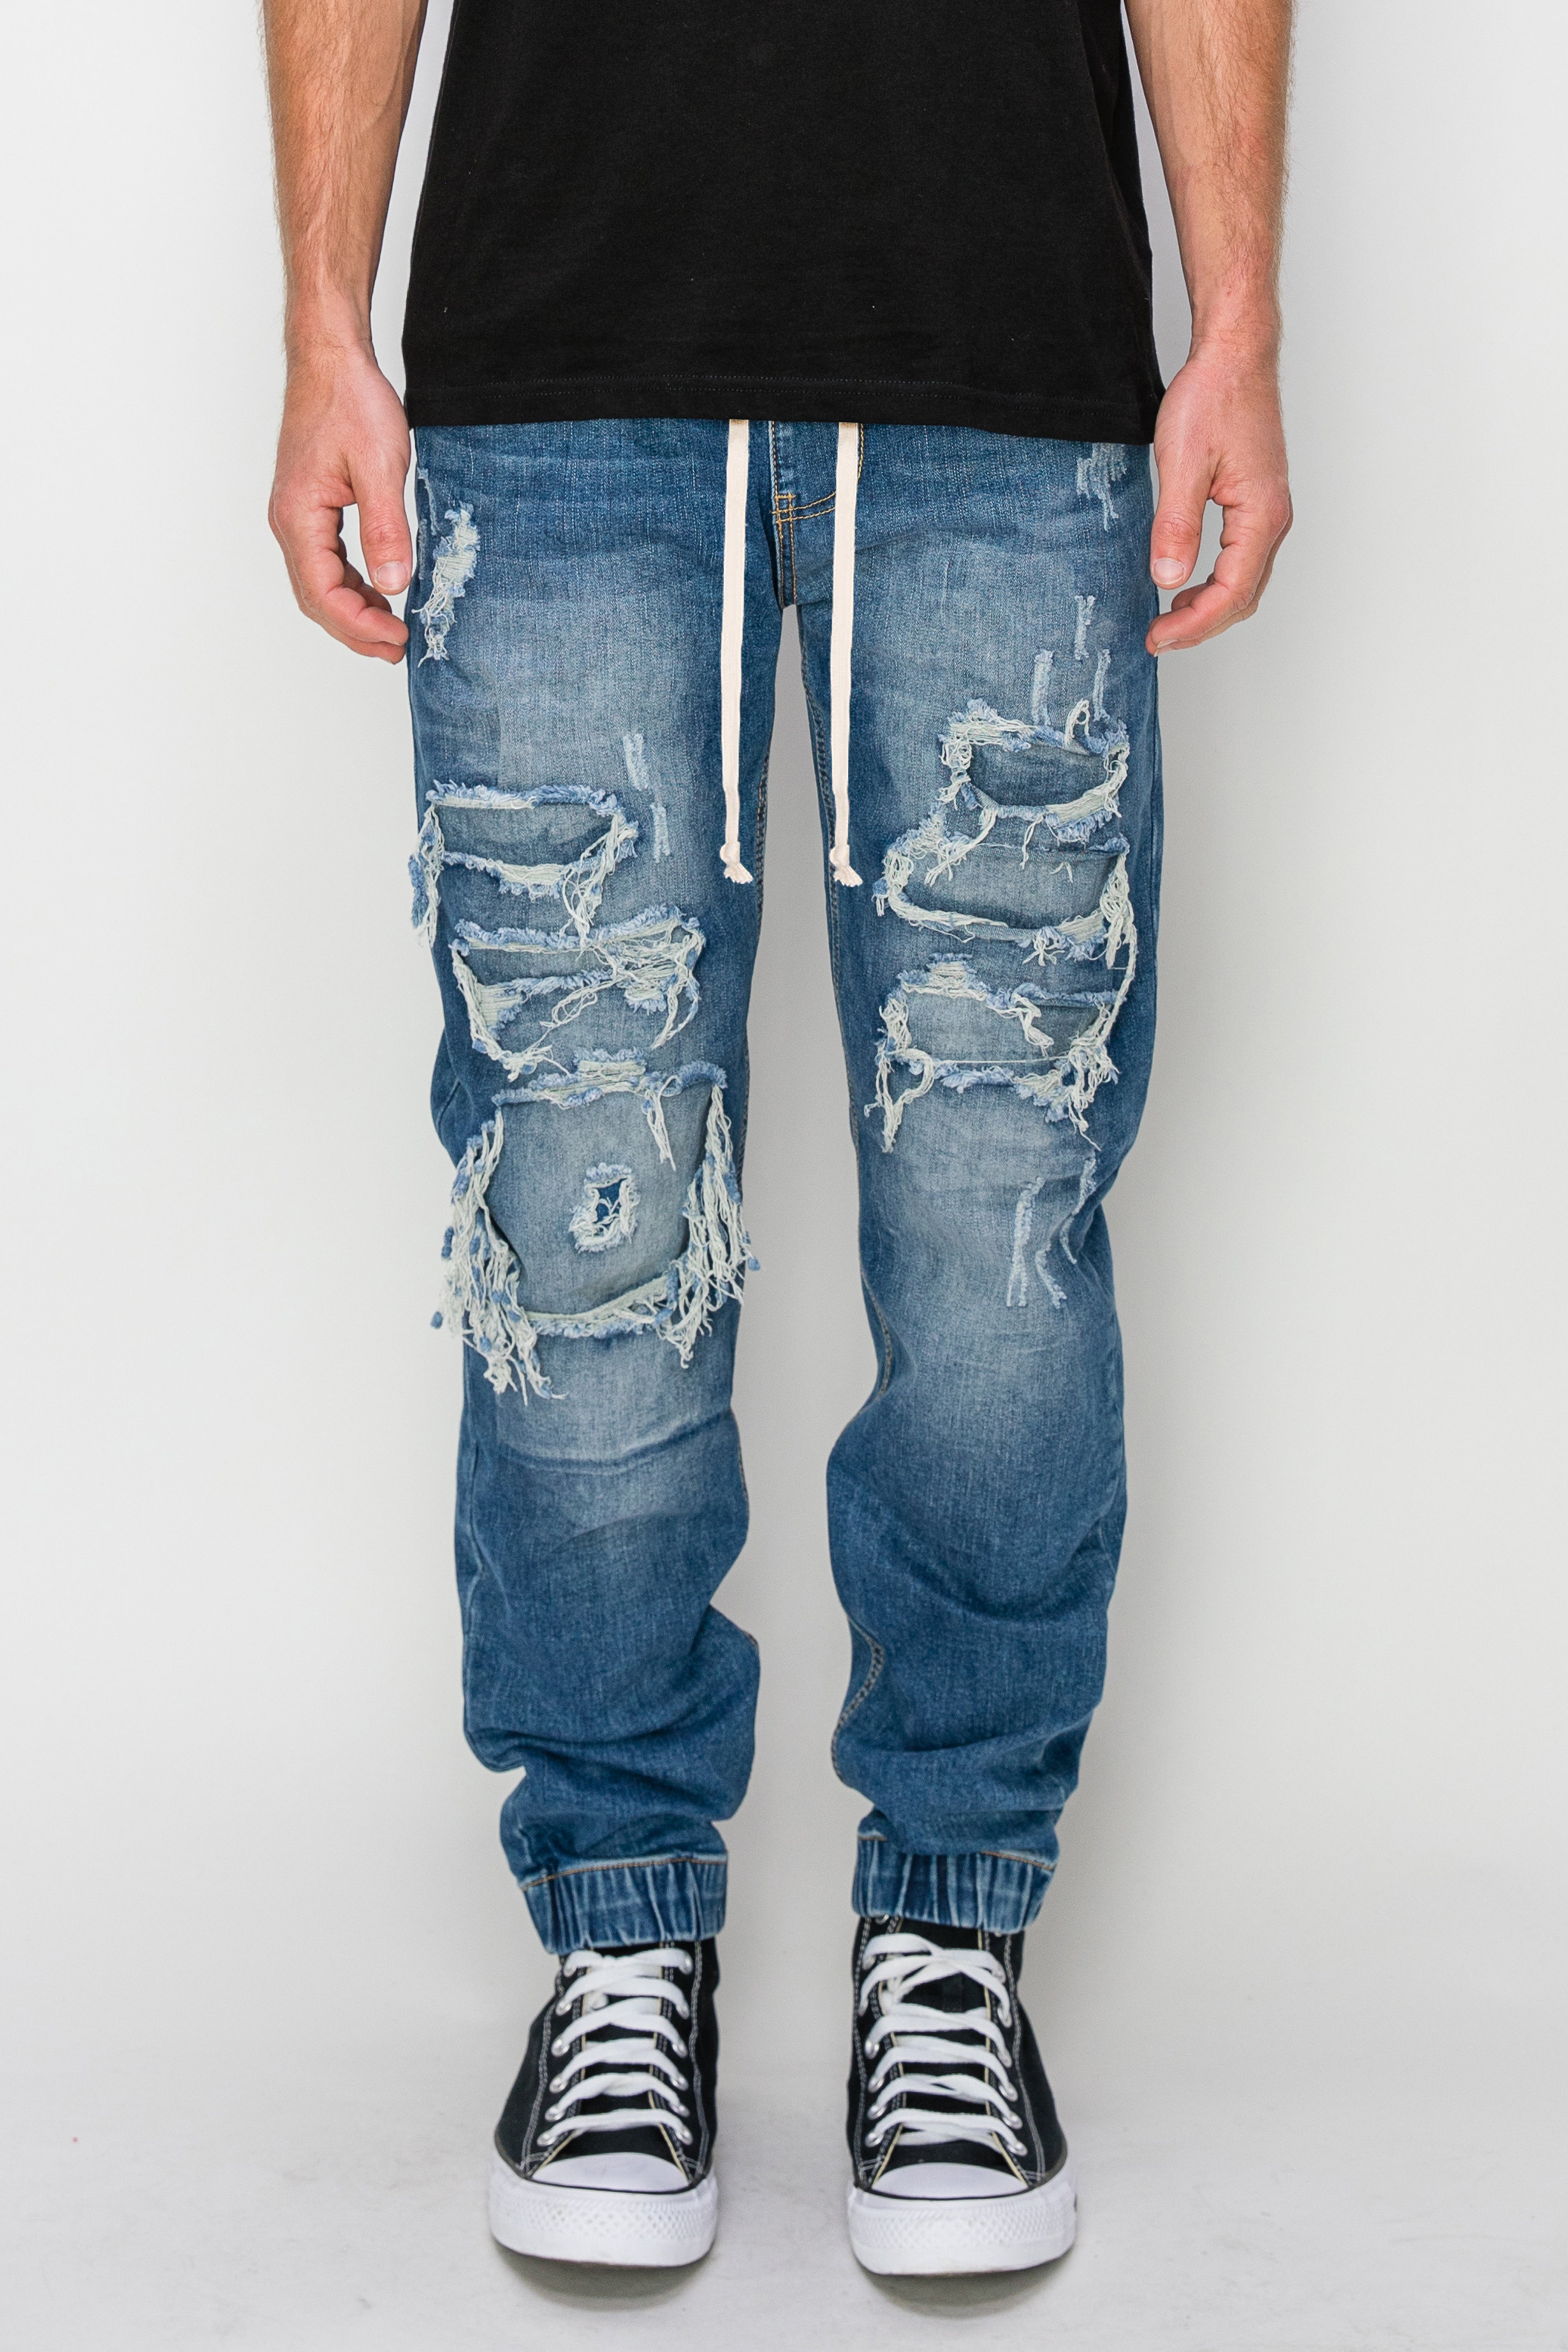 VICTORIOUSUSA Jeans – Distressed Jogger Denim